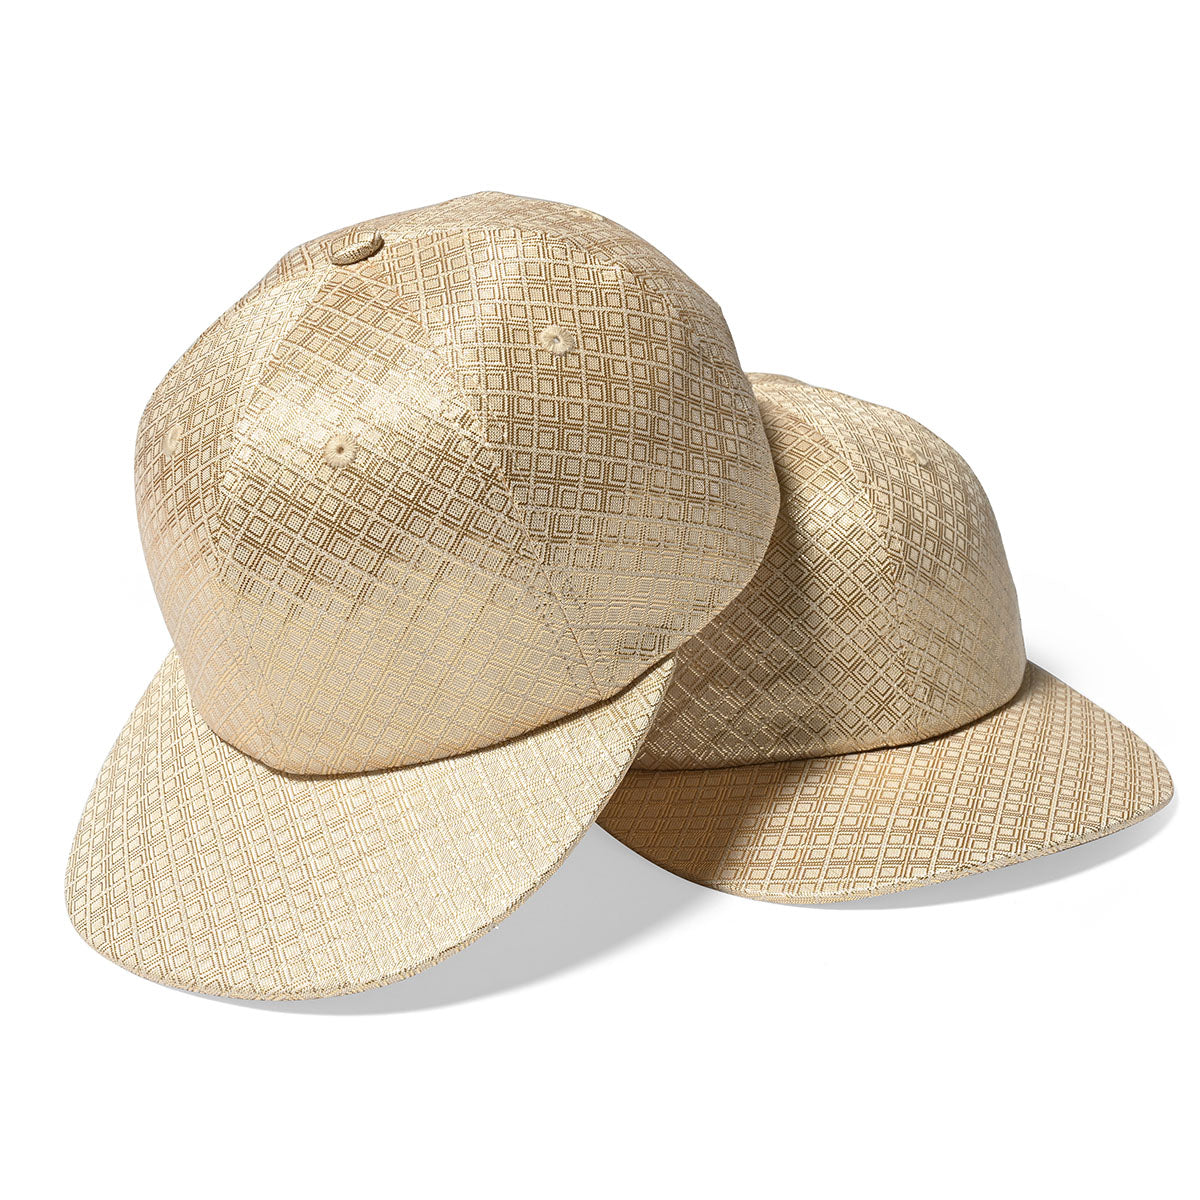 HOMEGAME - 12 型和服傳統日本布料老爹帽